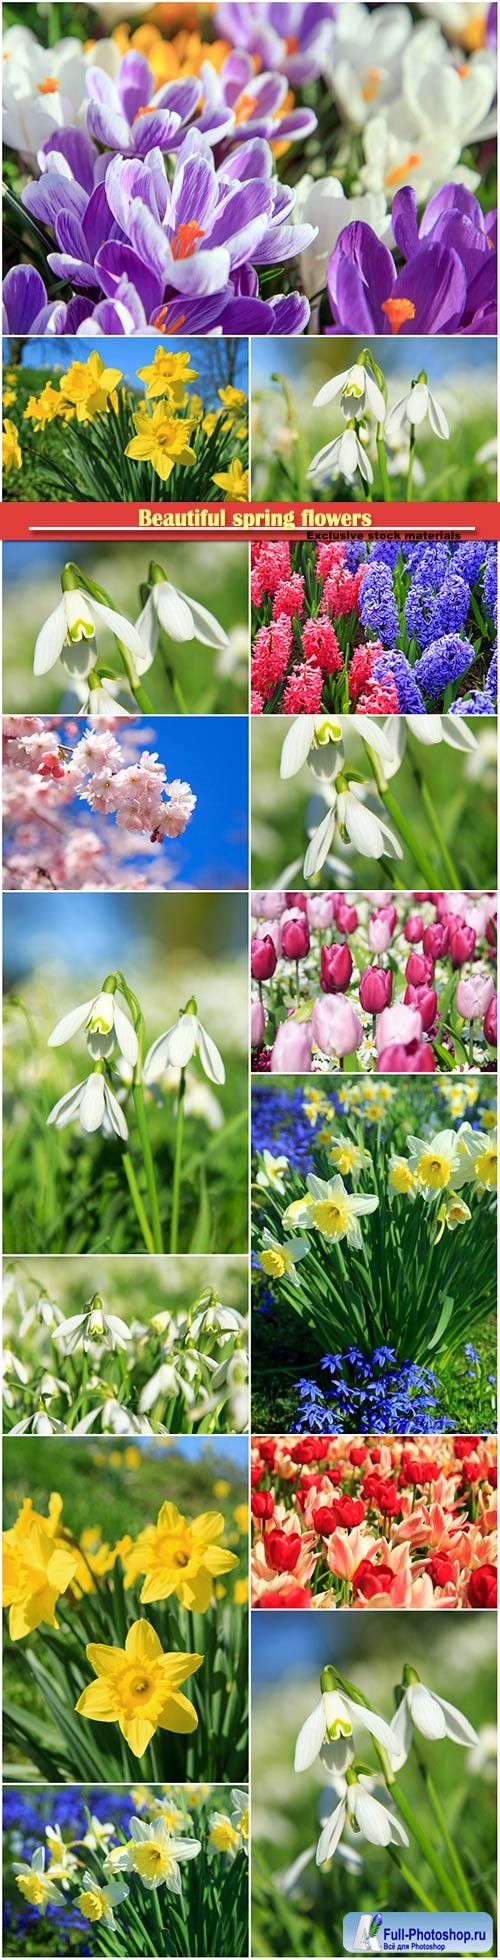 Beautiful spring flowers, snowdrops, daffodils, hyacinths, crocuses